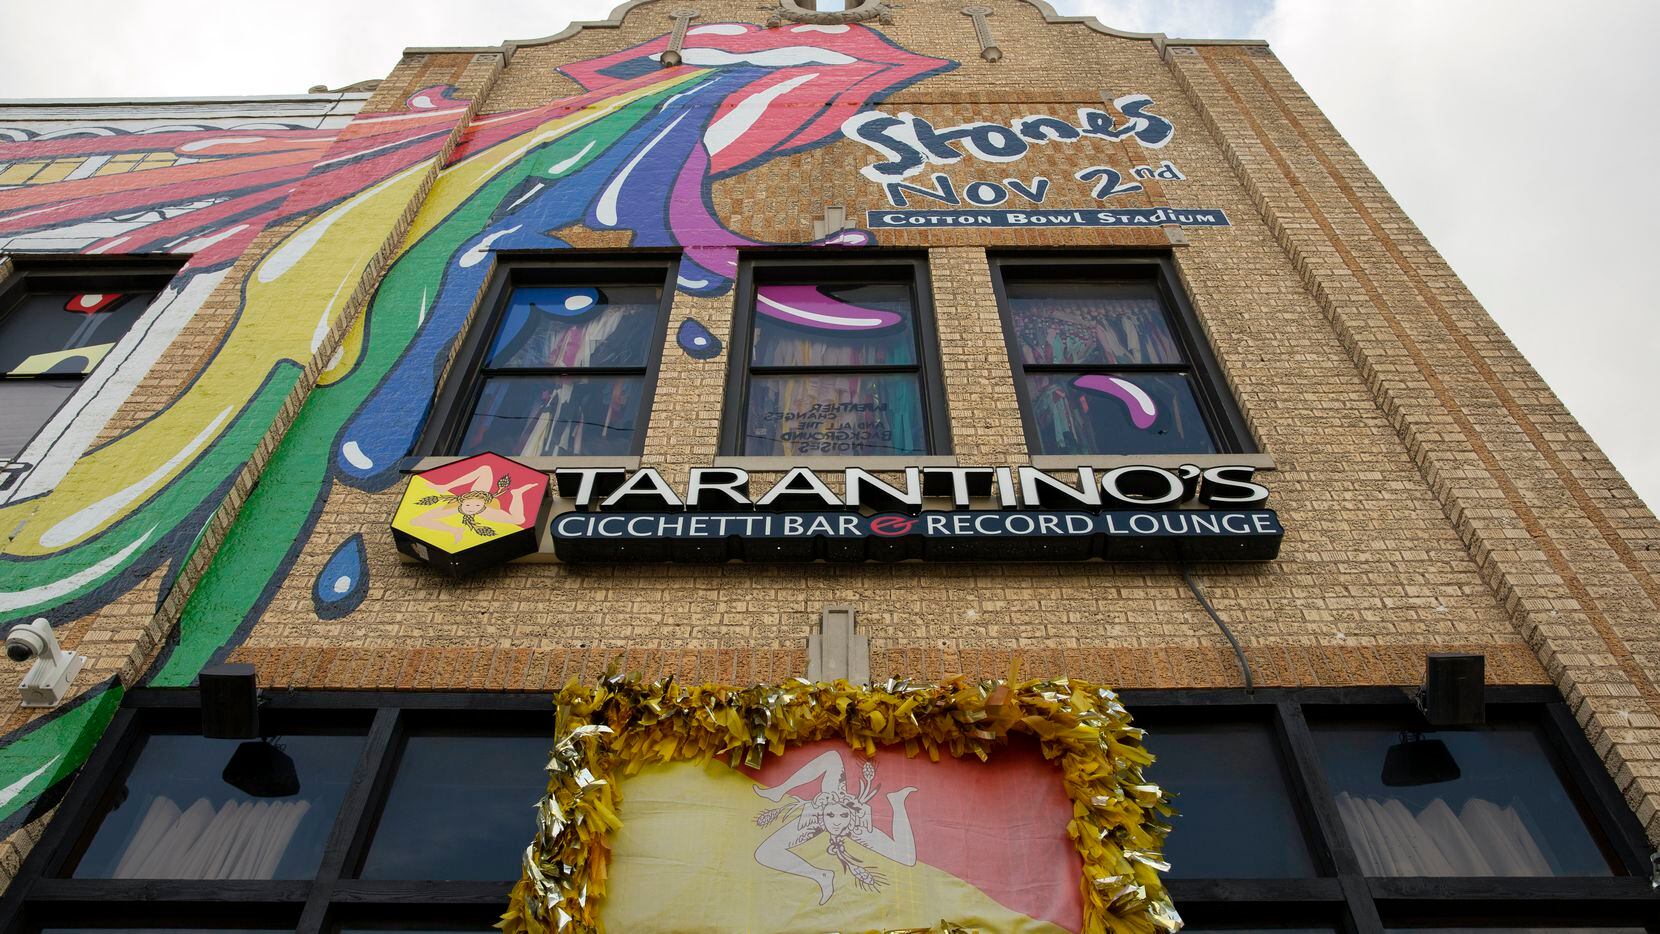 Tarantino's Cicchetti Bar is located across from Fair Park in Dallas.